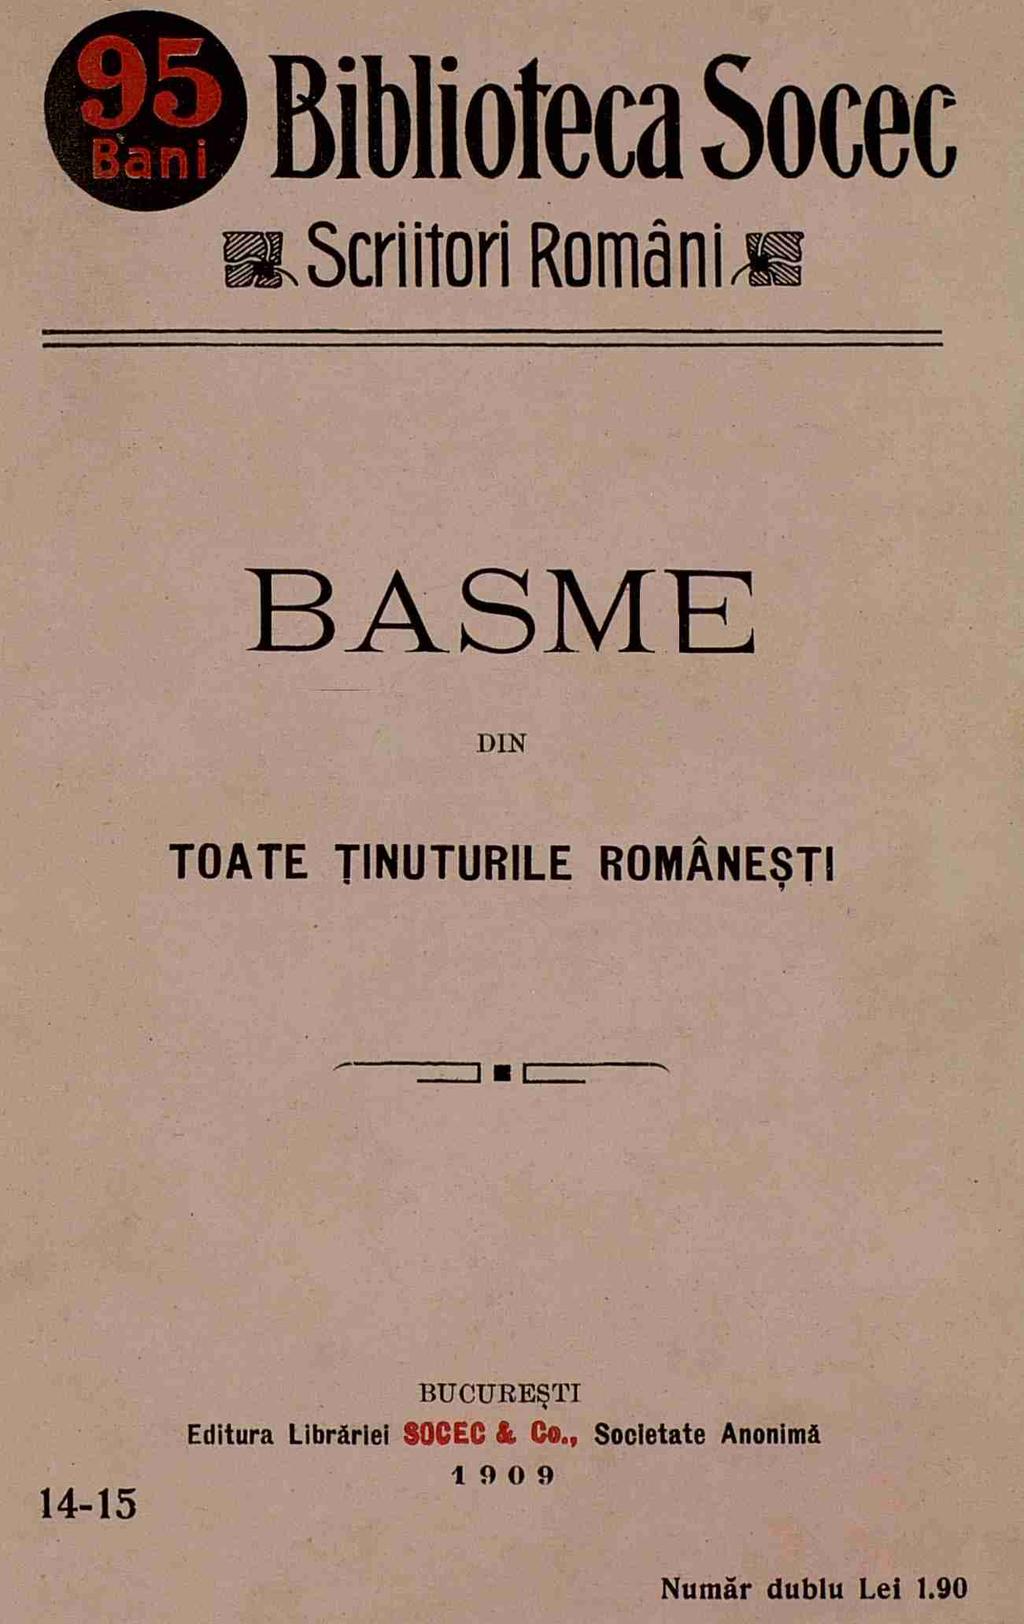 Biblioteca Socec Scriitori Romani ek BASME DIN TOATE TINUTURILE ROMANESTI 1 1 14-15